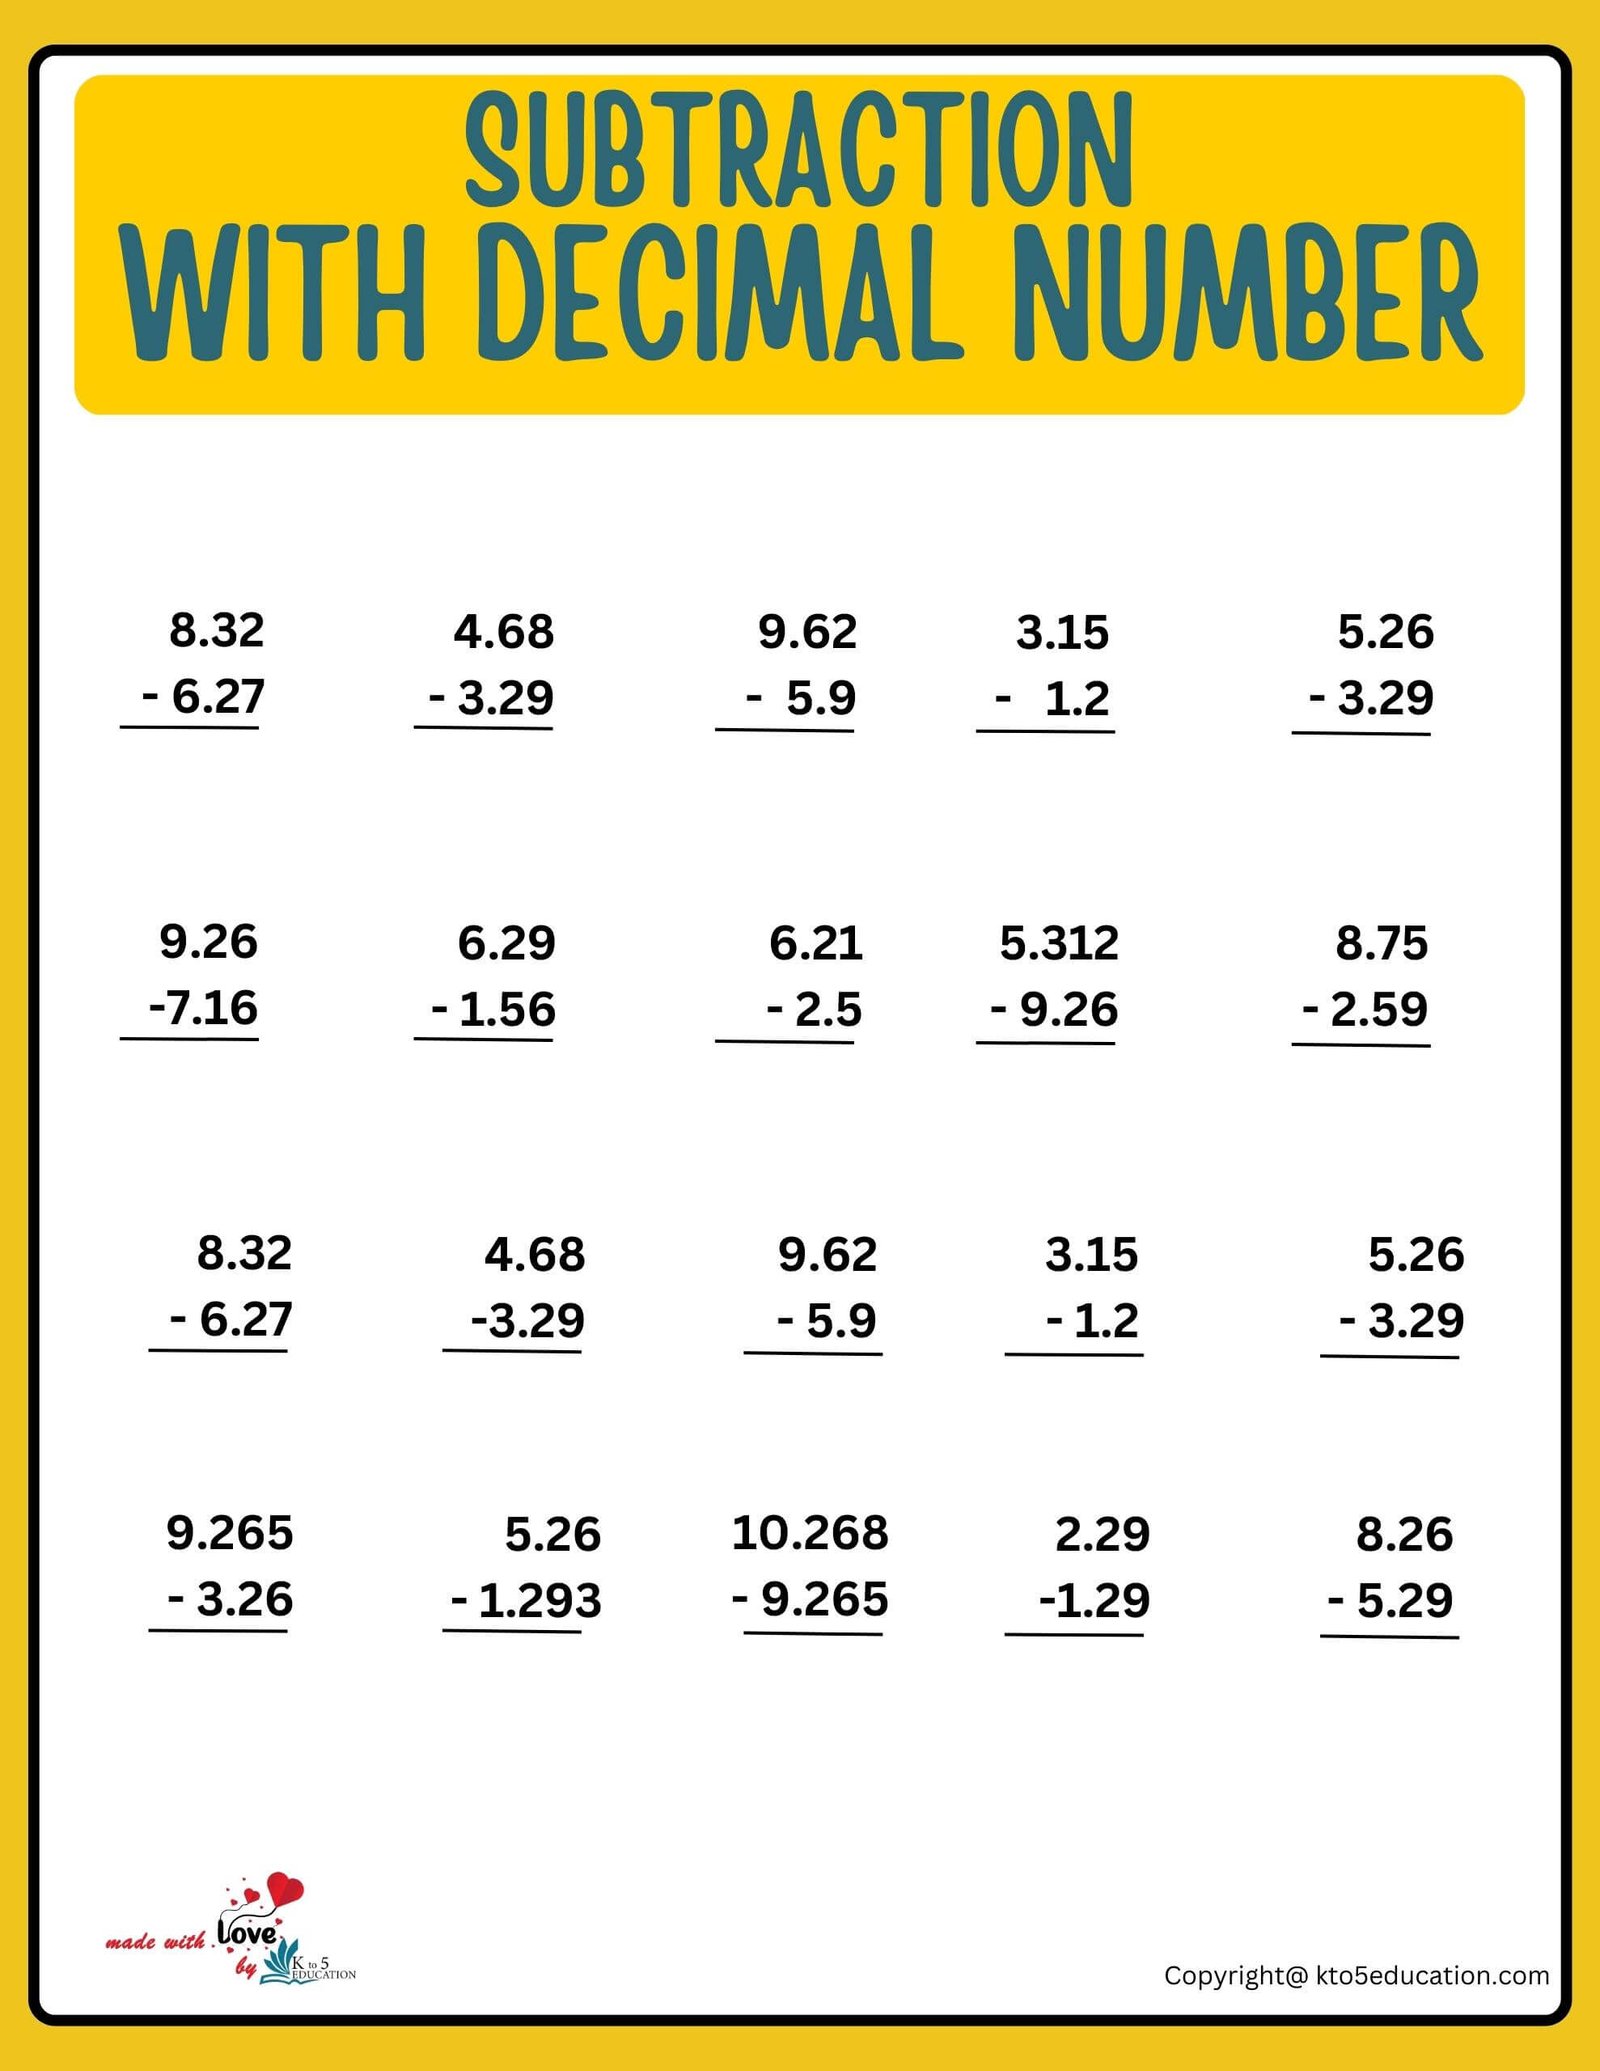 Subtraction With Decimal Number Worksheet For Online Practice